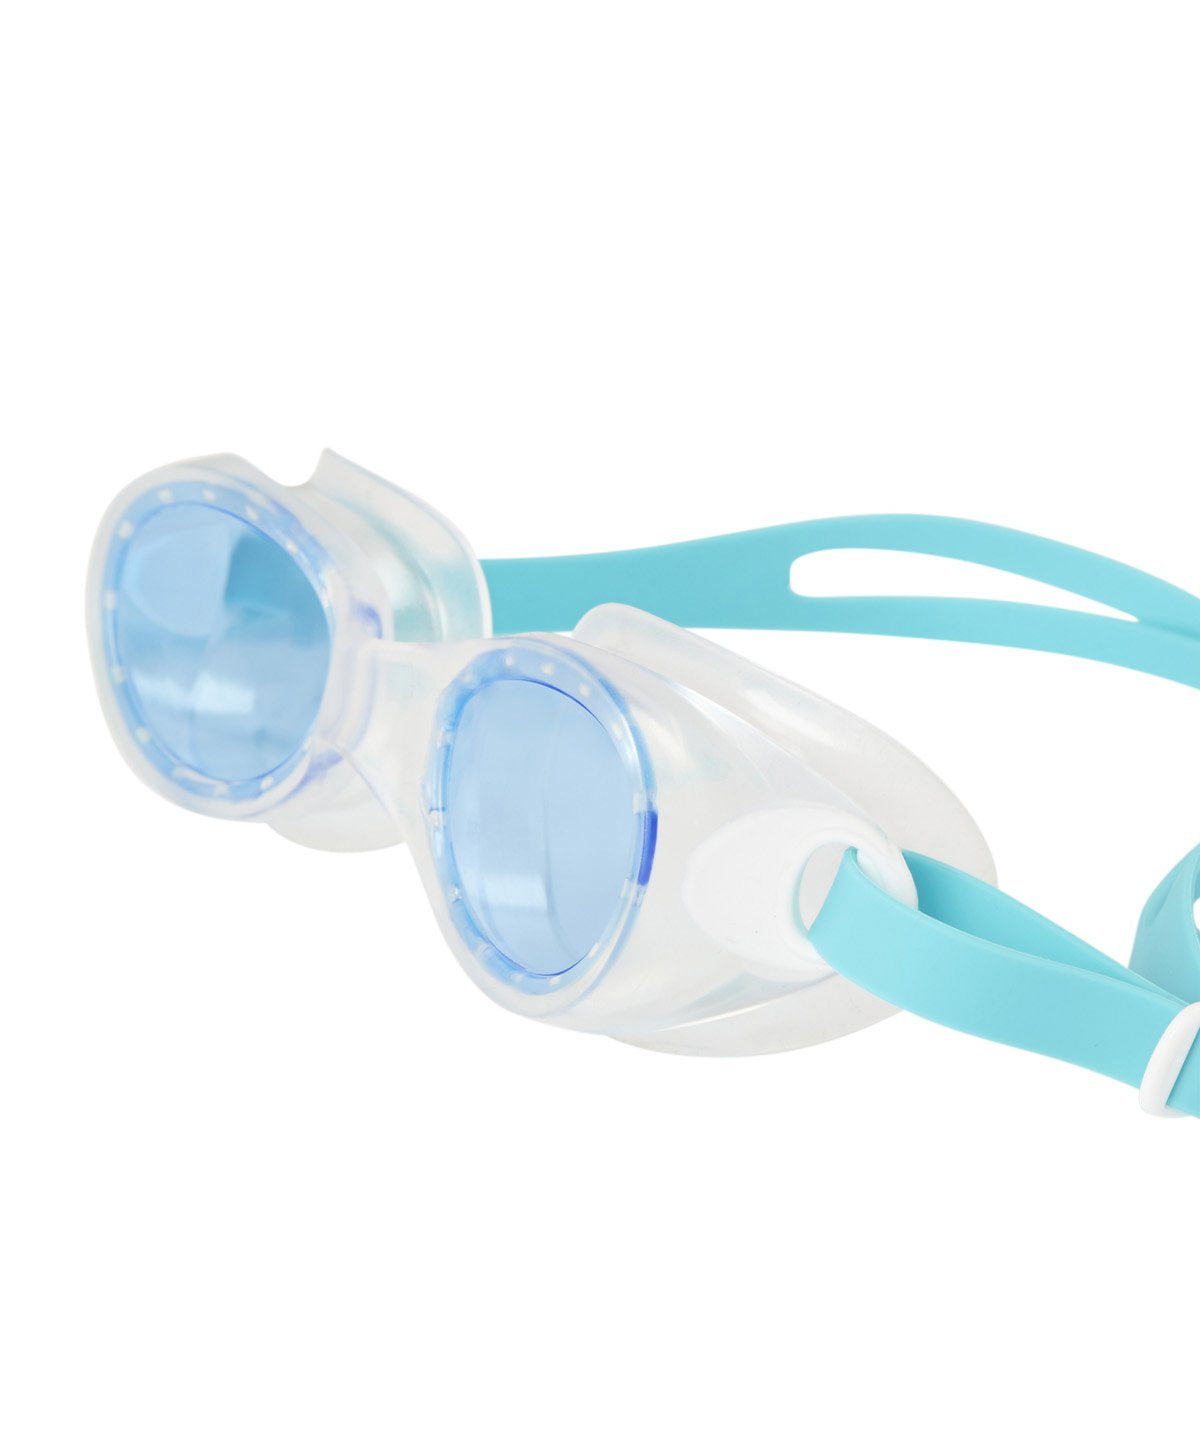 Speedo Futra Classic Swimming Goggles, Adult Free Size (Green/Blue) - Best Price online Prokicksports.com